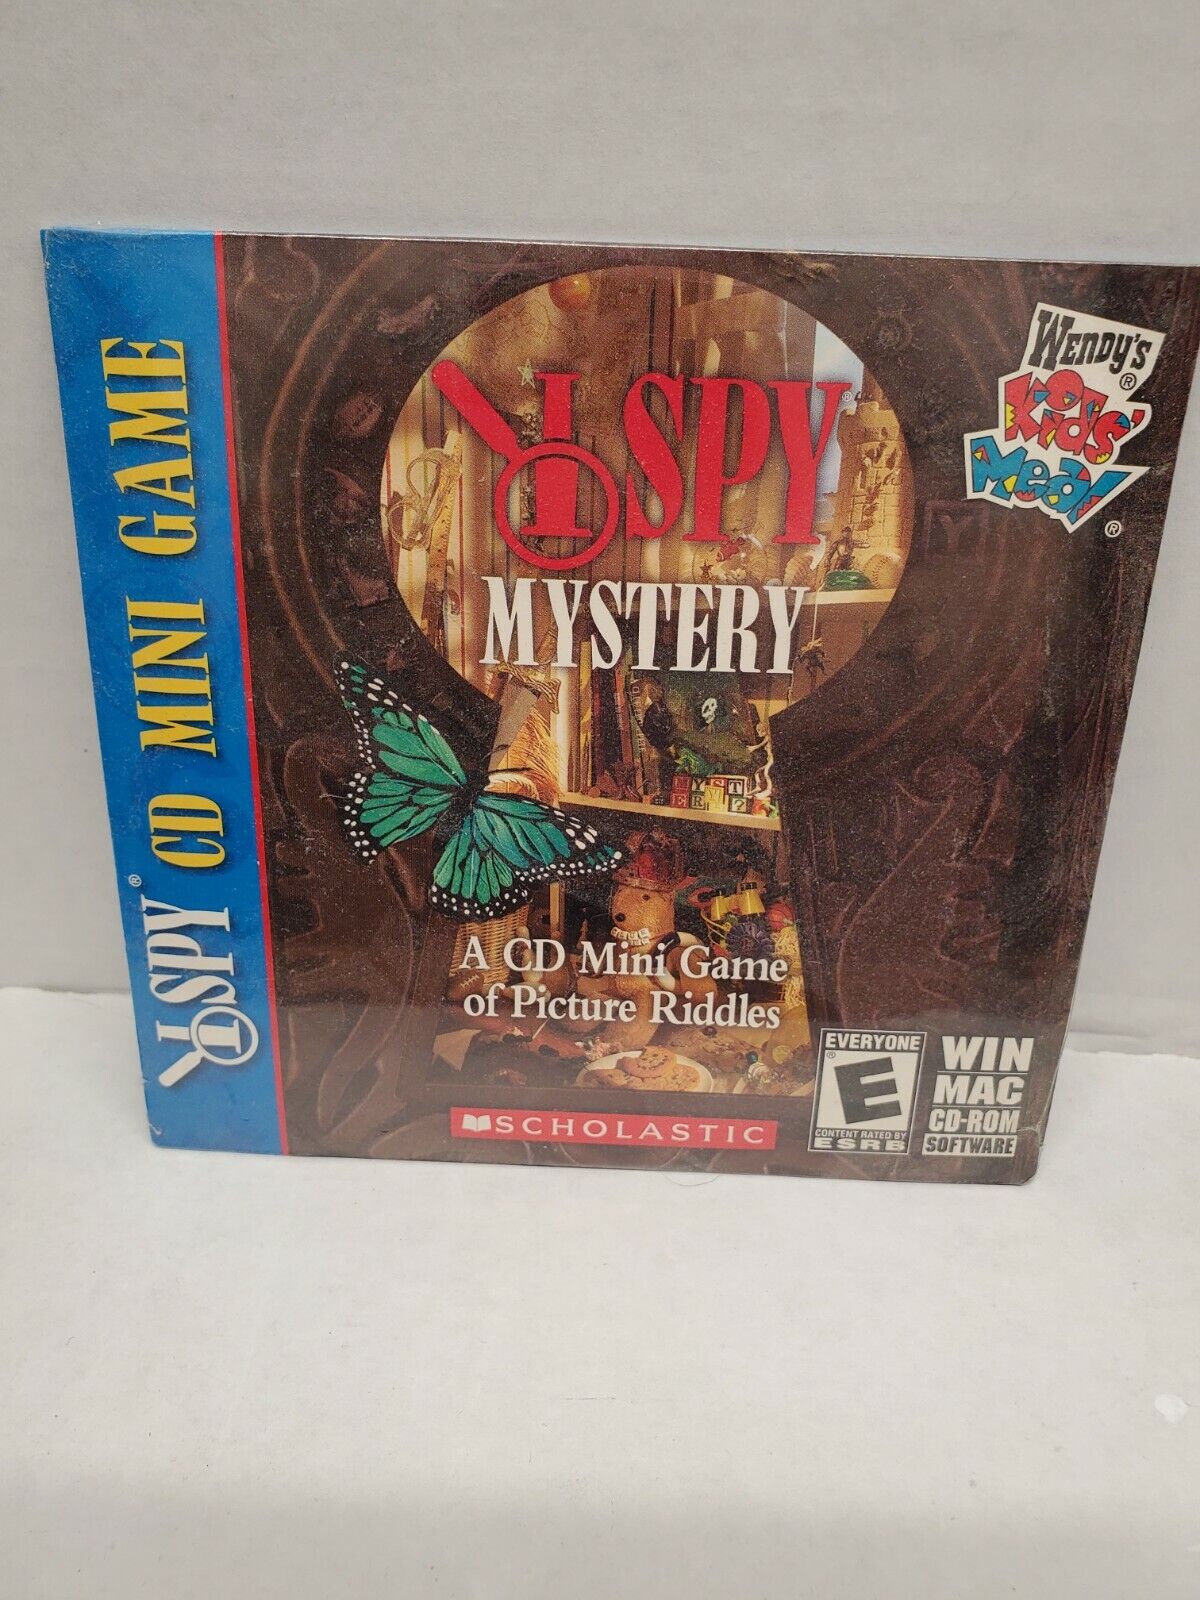 Wendy's Kids Meal I Spy CD Mini Game - I Spy Mystery - Scholastic - New Sealed